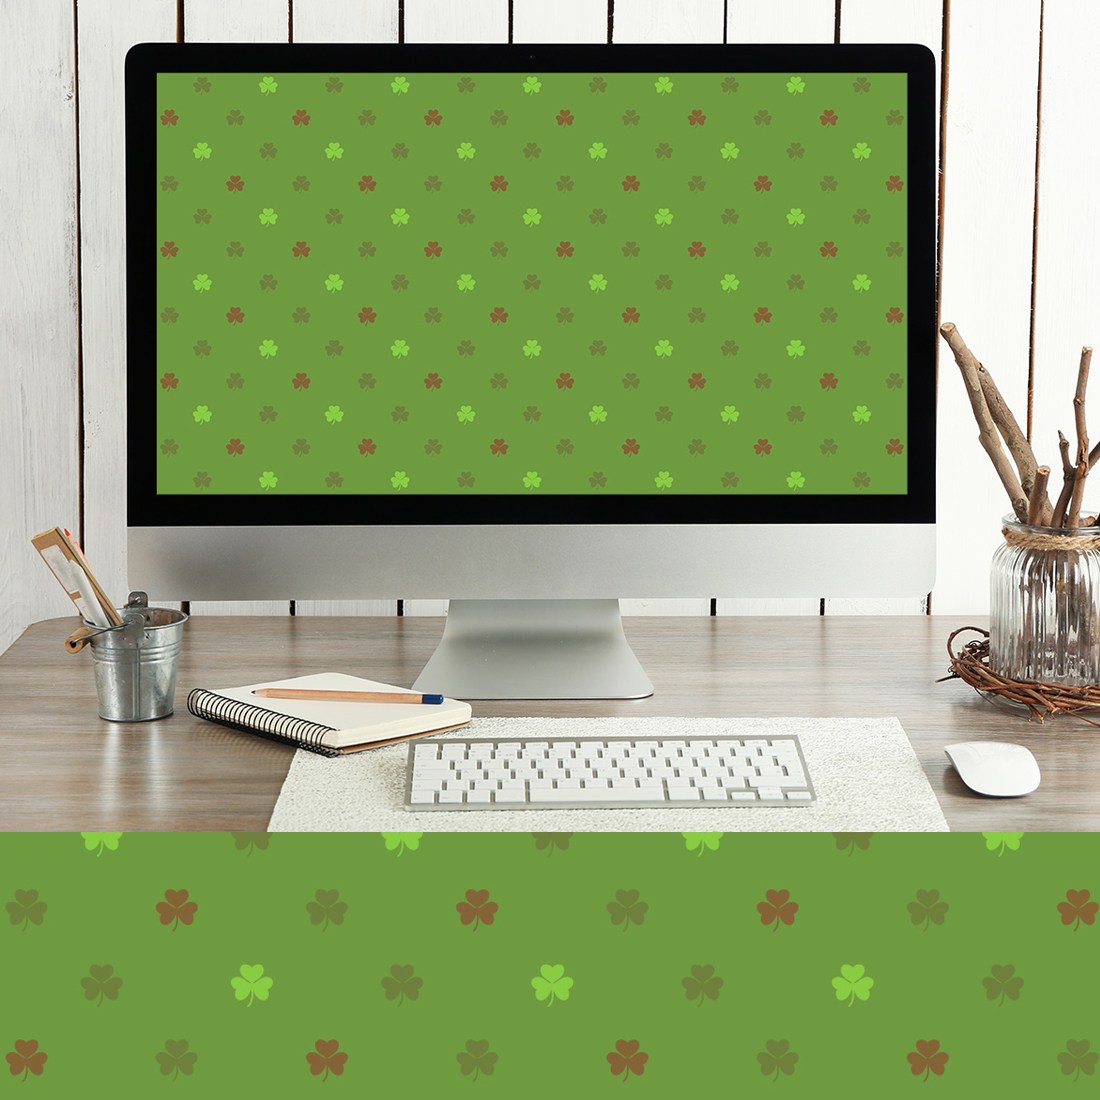 Patrick's Day Wallpaper - Computer Desk , HD Wallpaper & Backgrounds